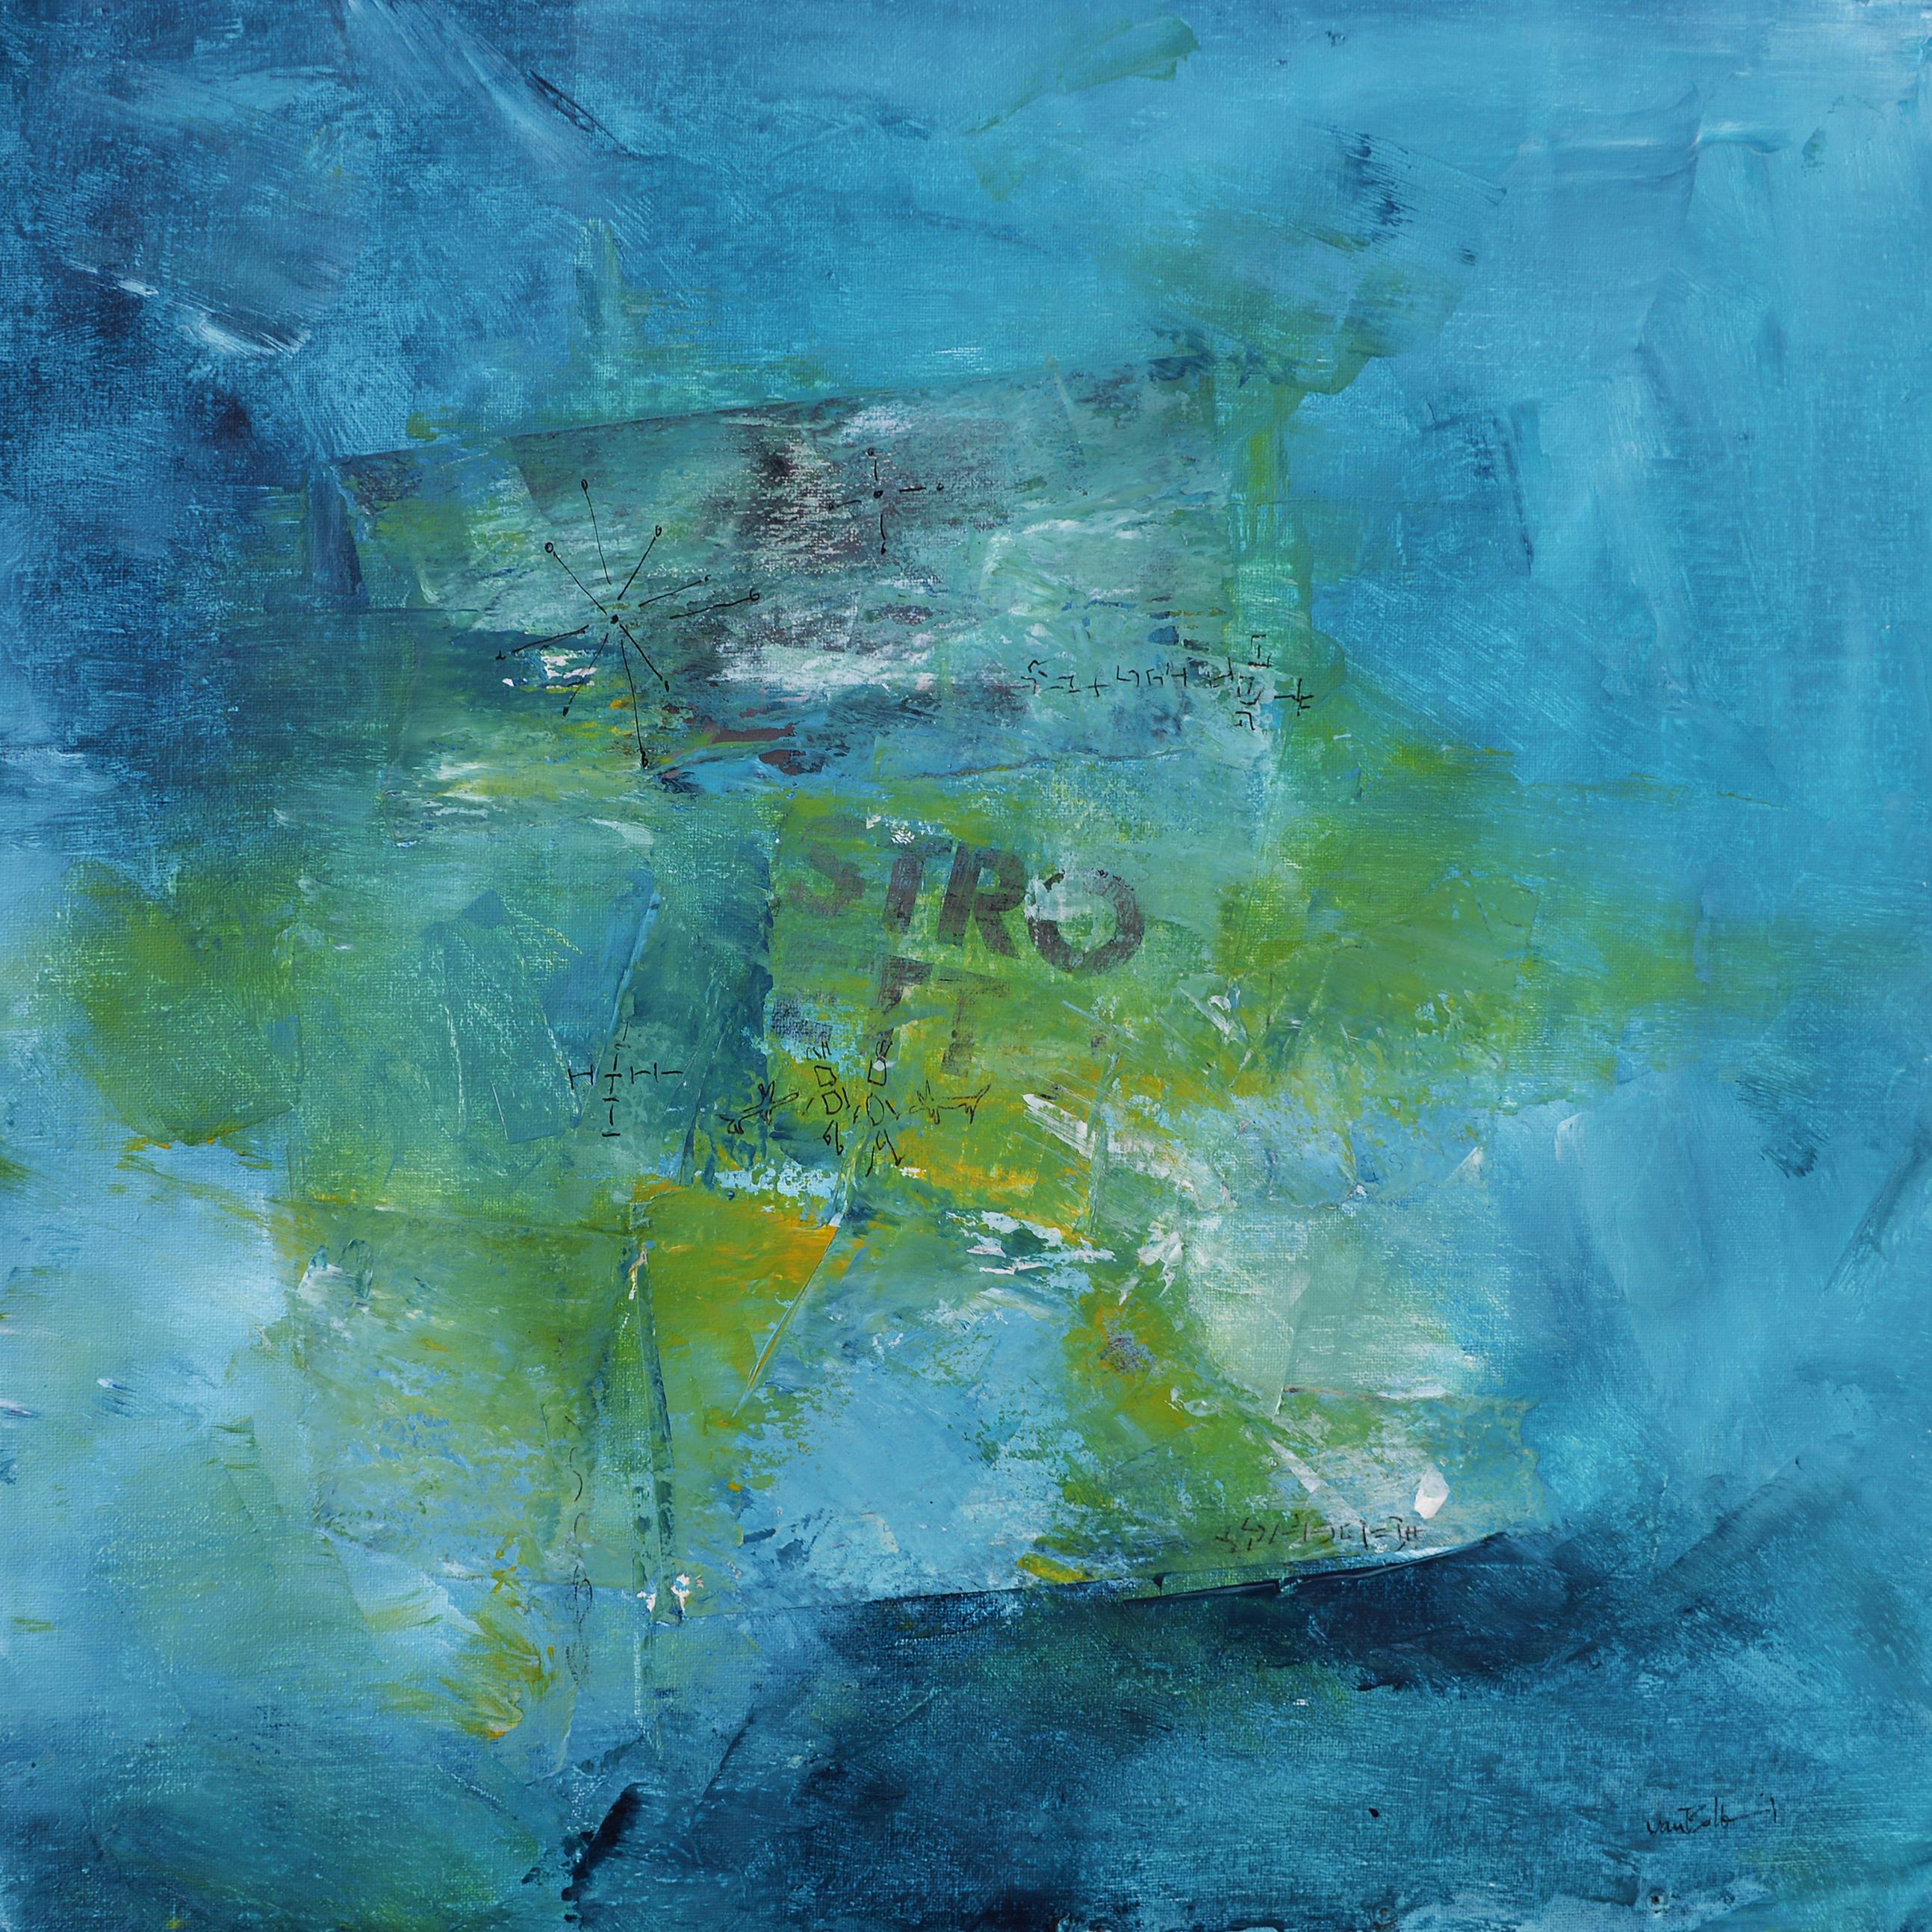 STRO, light blue, green yellow abstract painting. - Mixed Media Art by Robert van Bolderick